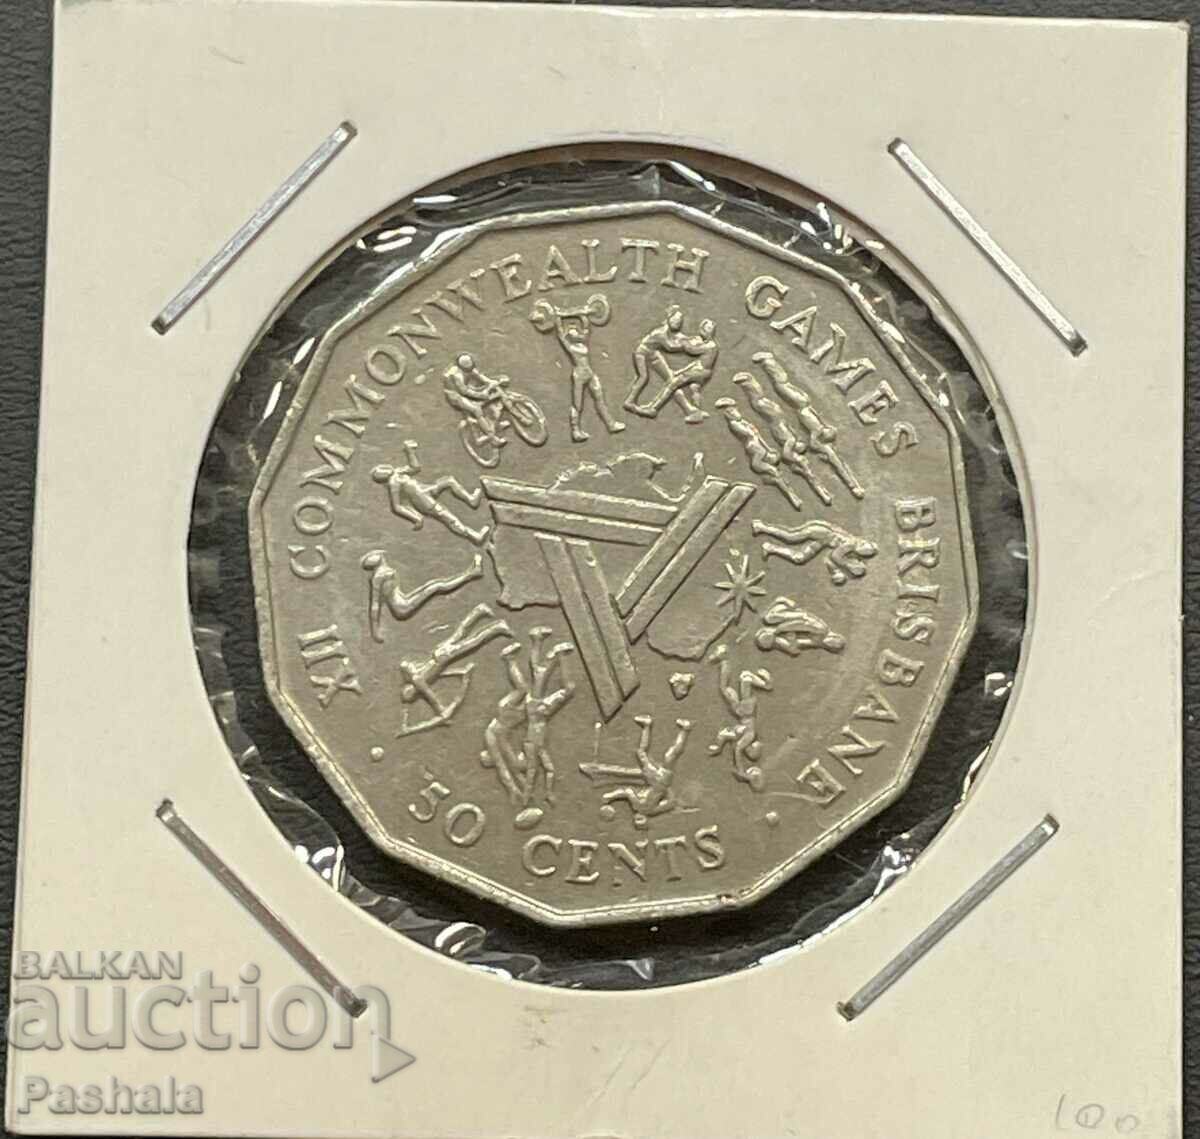 Australia 50 cents 1982